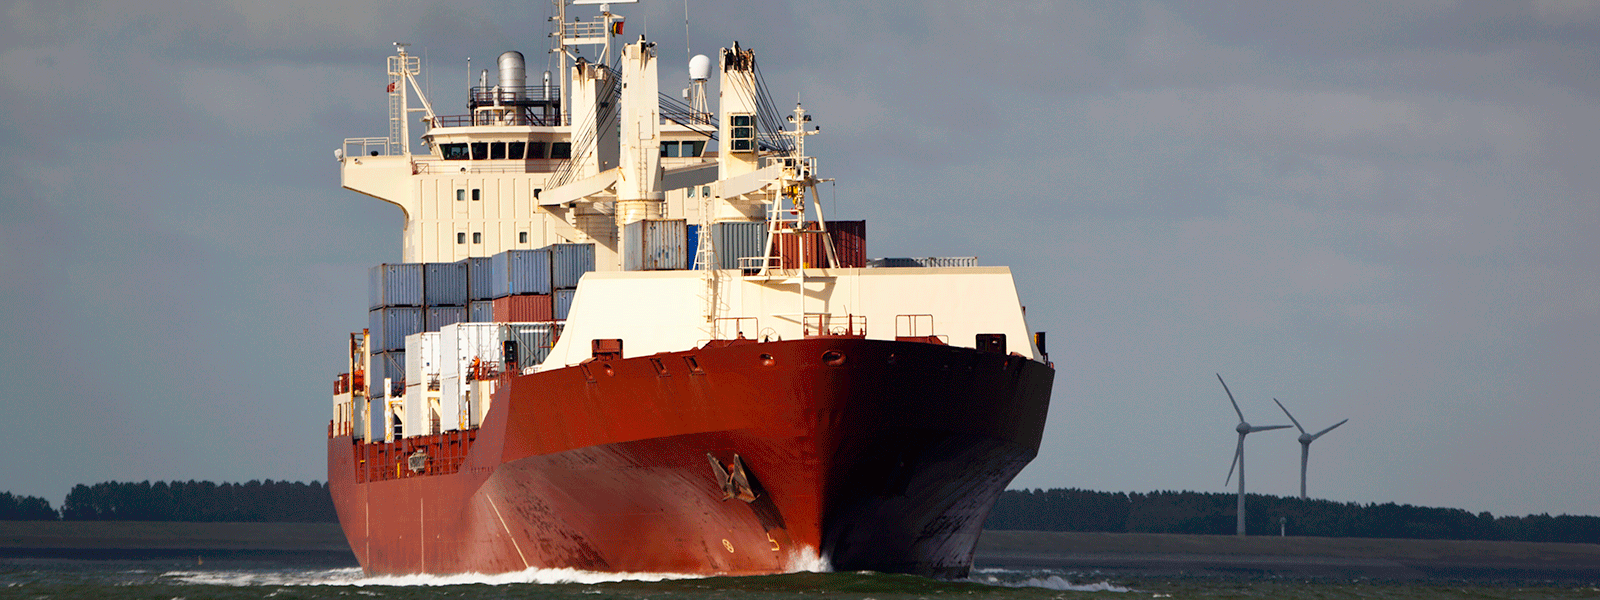 Red hull of a bulk cargo ship.